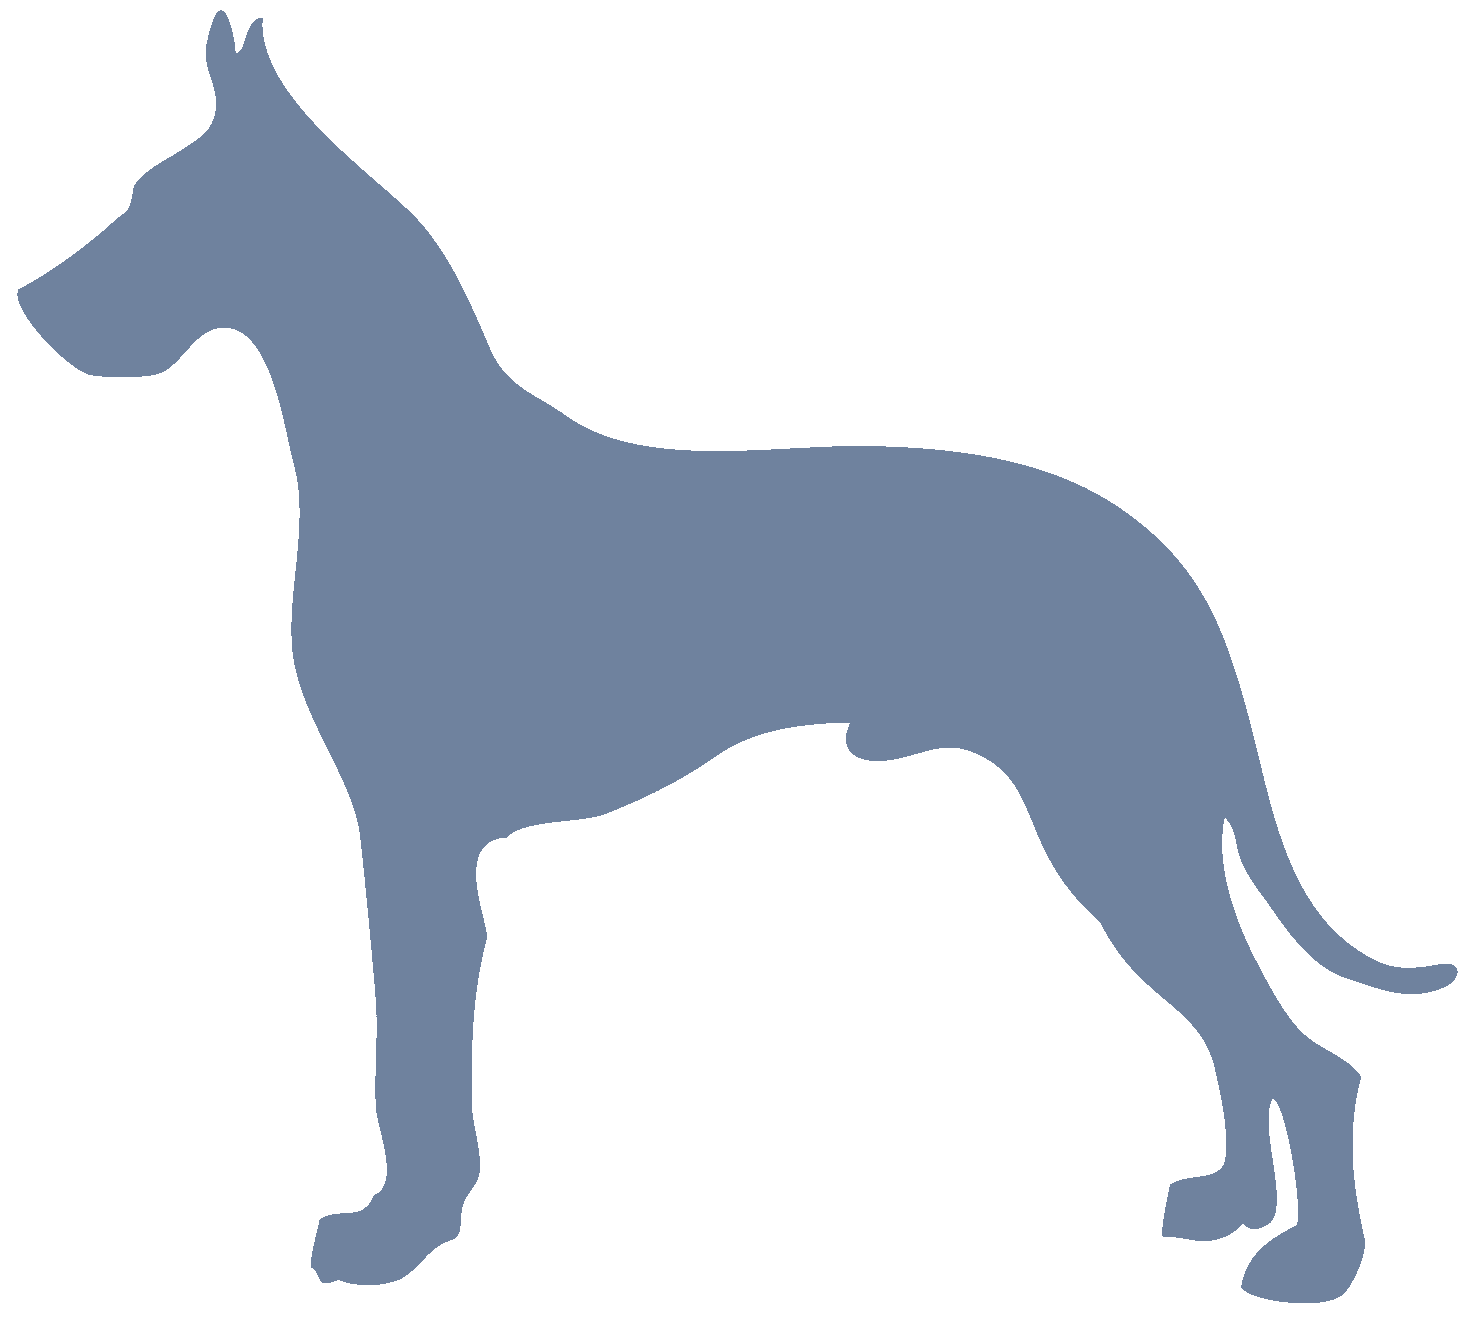 Sighthound